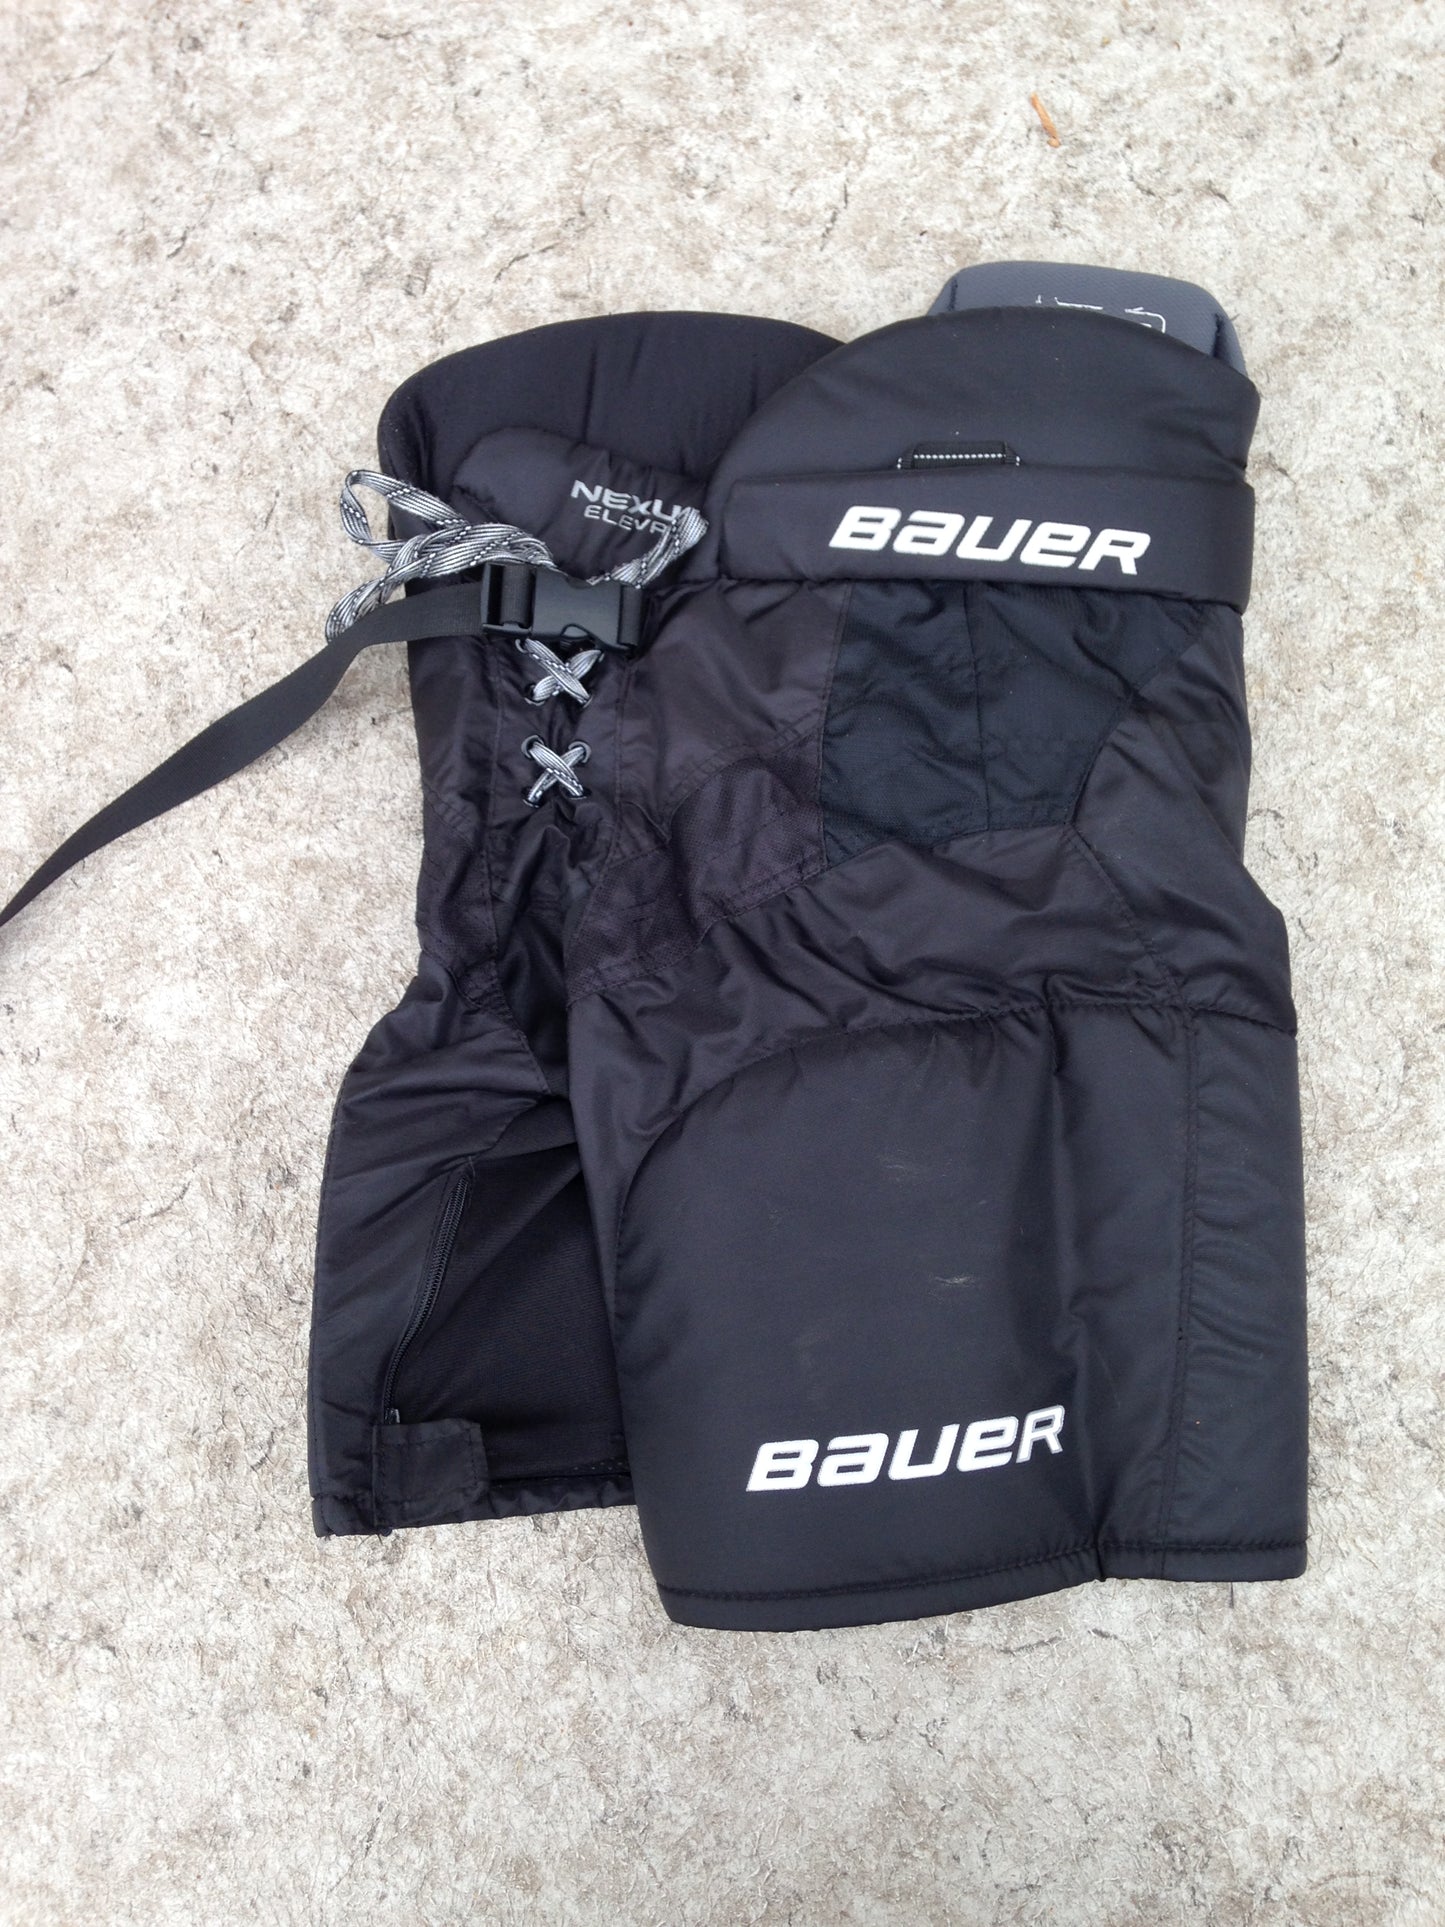 Hockey Pants Child Size Junior Large Bauer Nexus Elevate As New Excellent Black